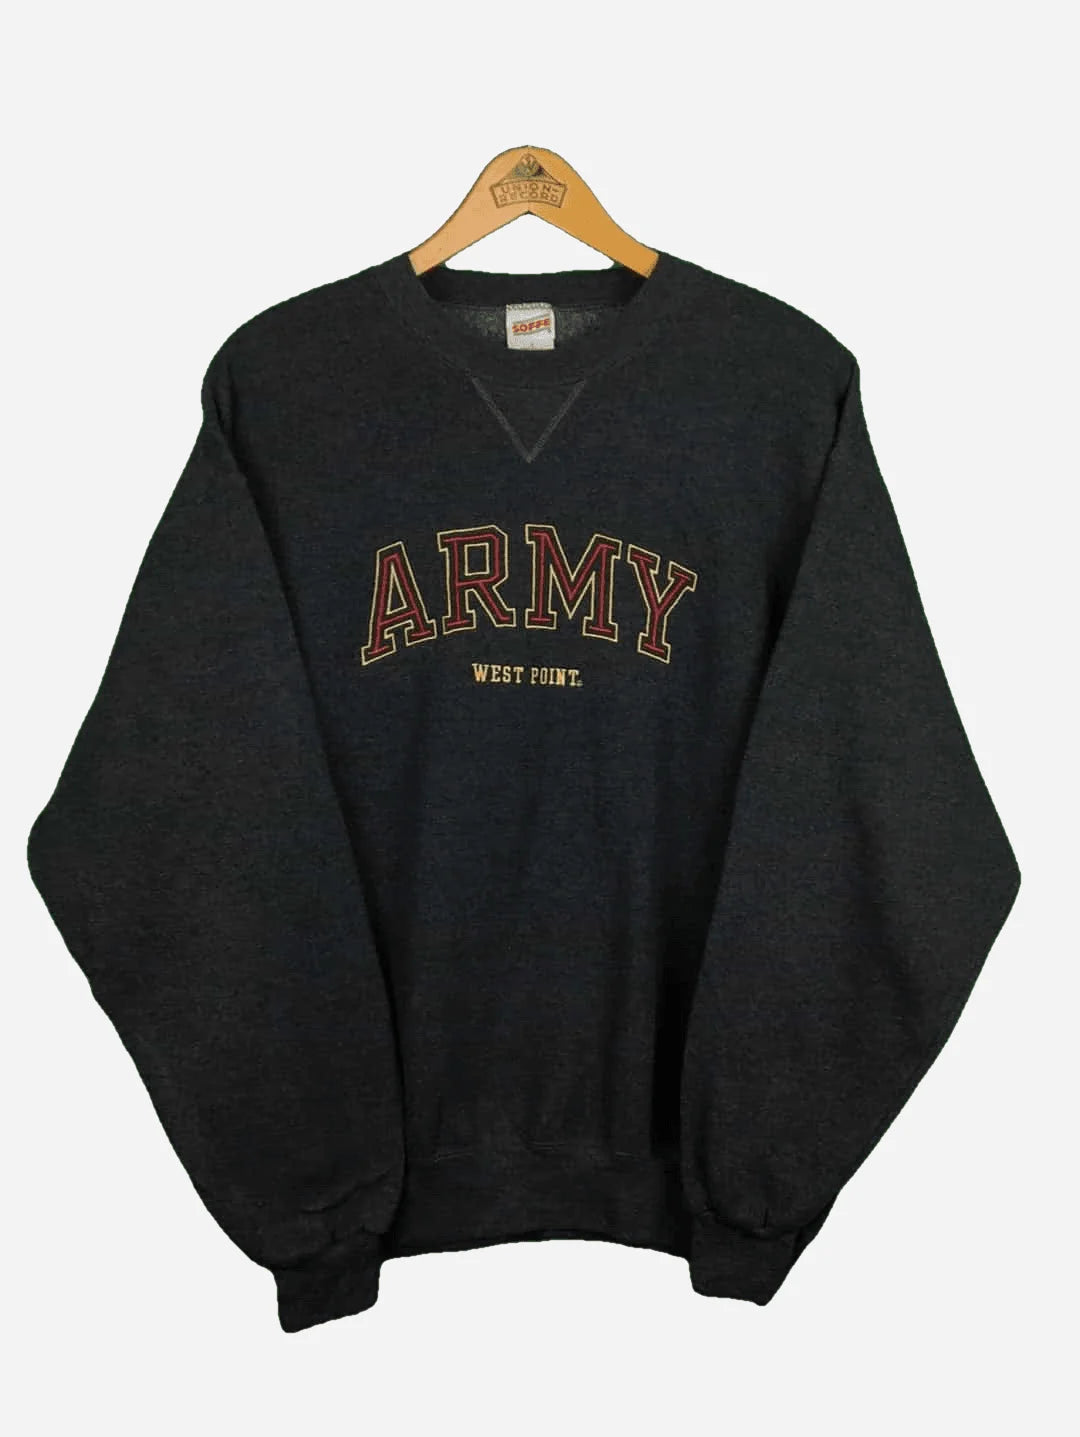 Army West Point Sweater (XL)